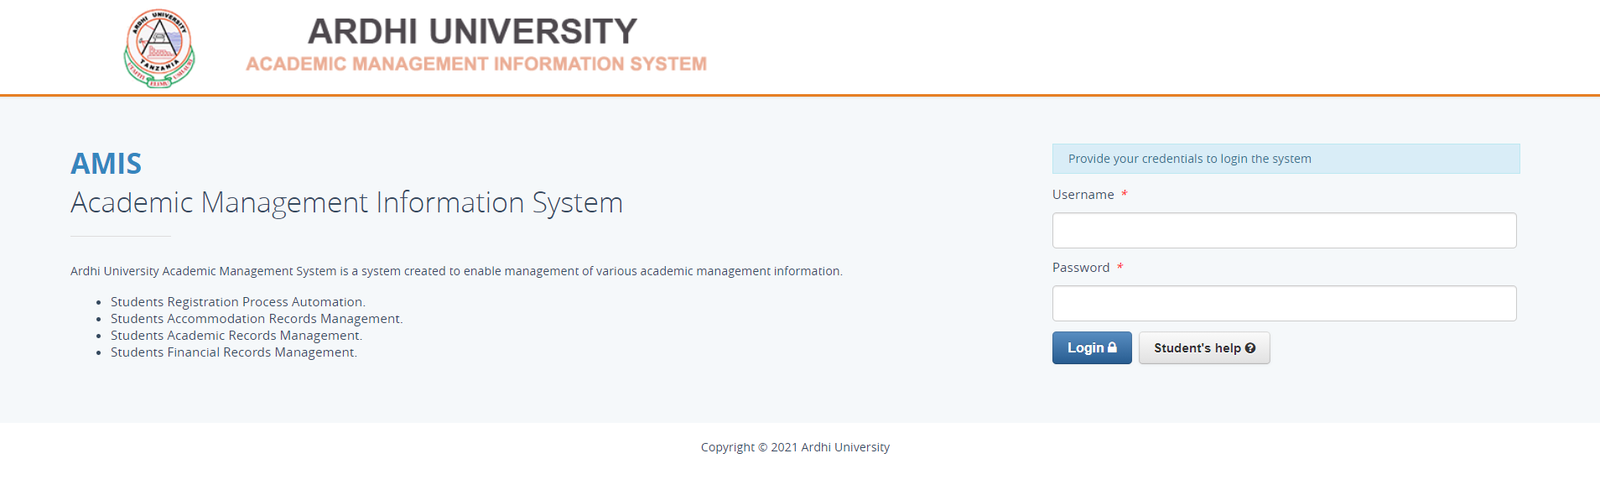 Ardhi University Academic Management Information System